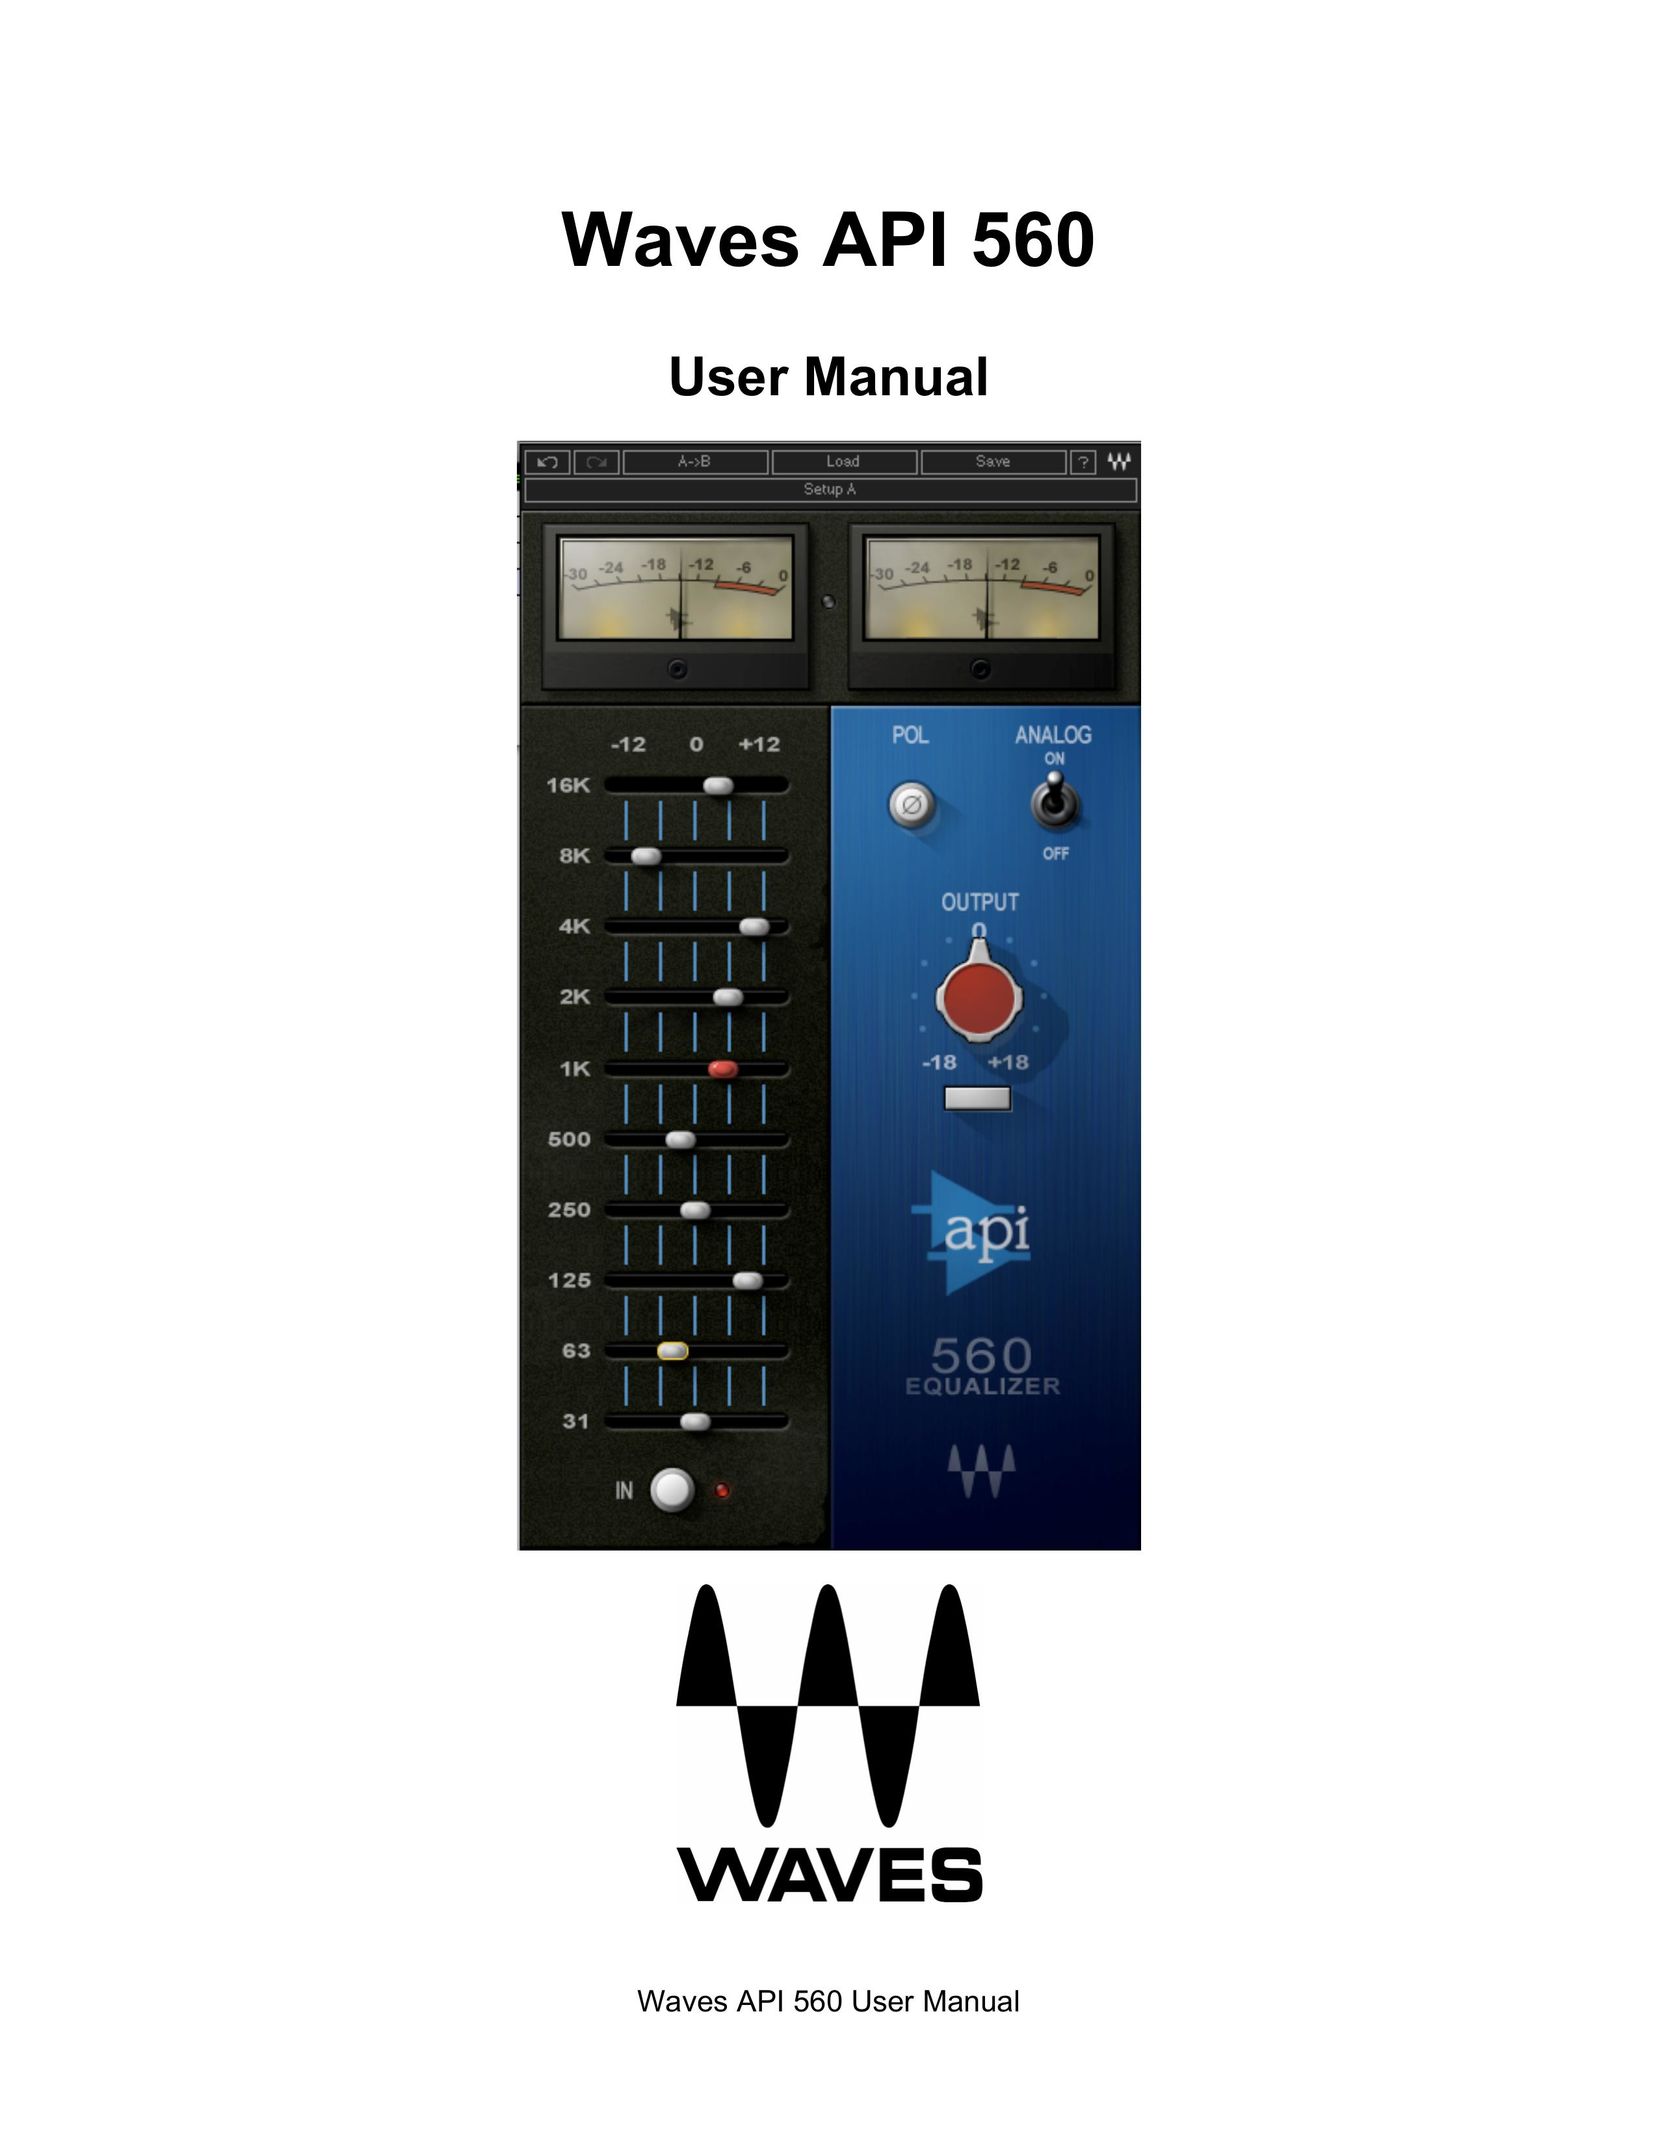 Waves API560 Stereo Equalizer User Manual